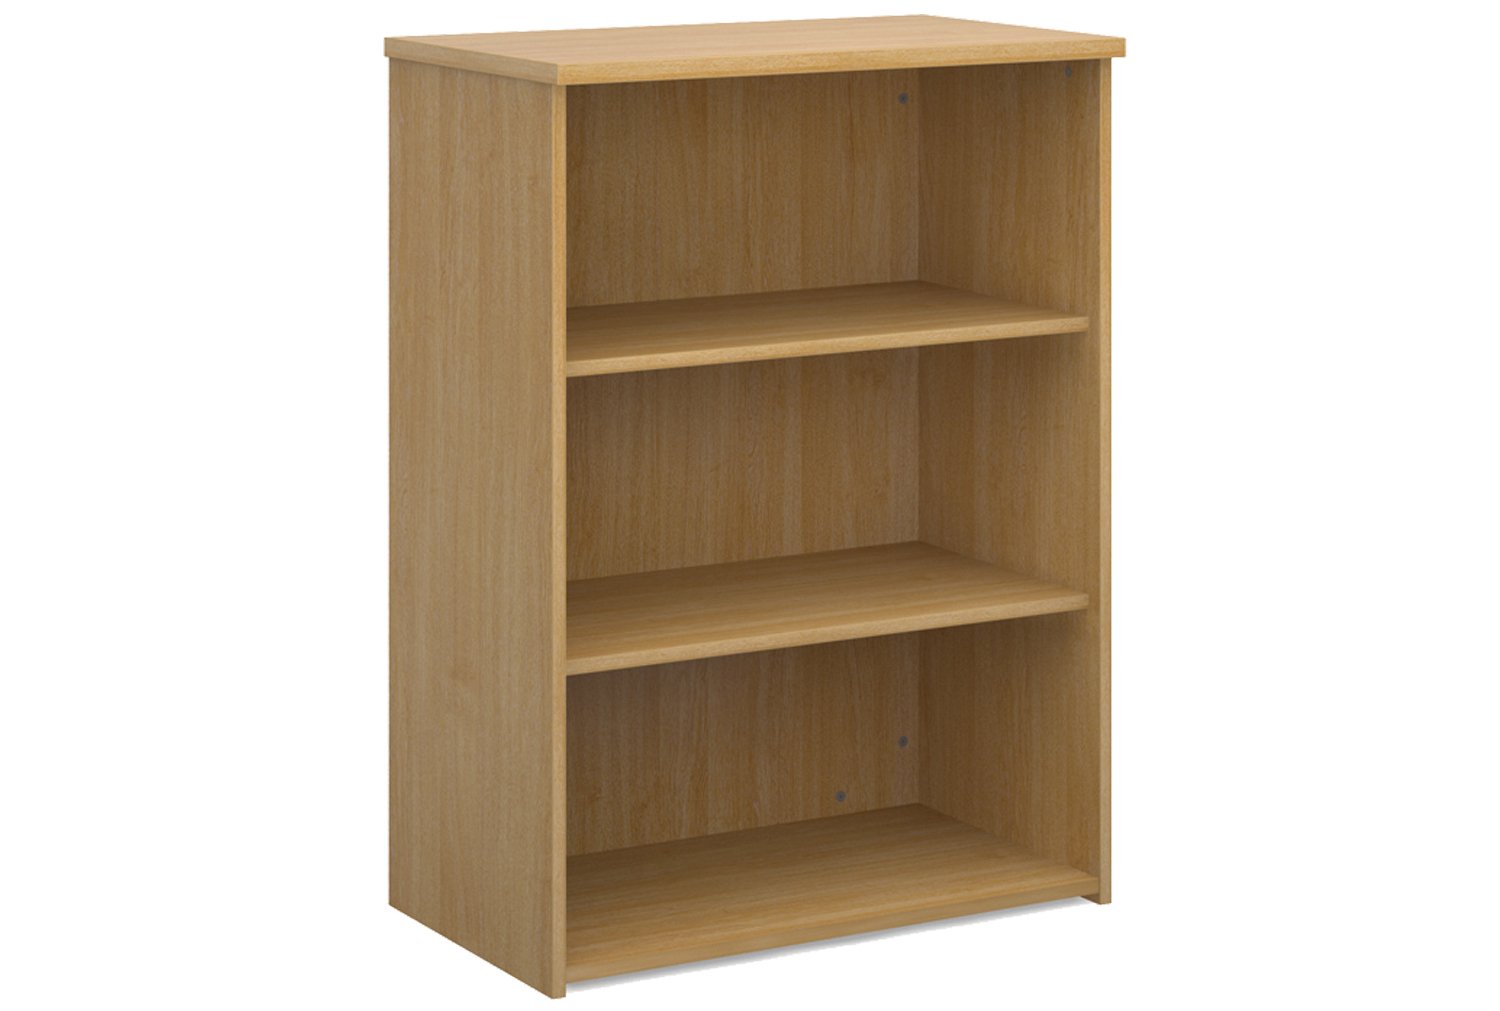 Tully Office Bookcases, 2 Shelf - 80wx47dx109h (cm), Oak